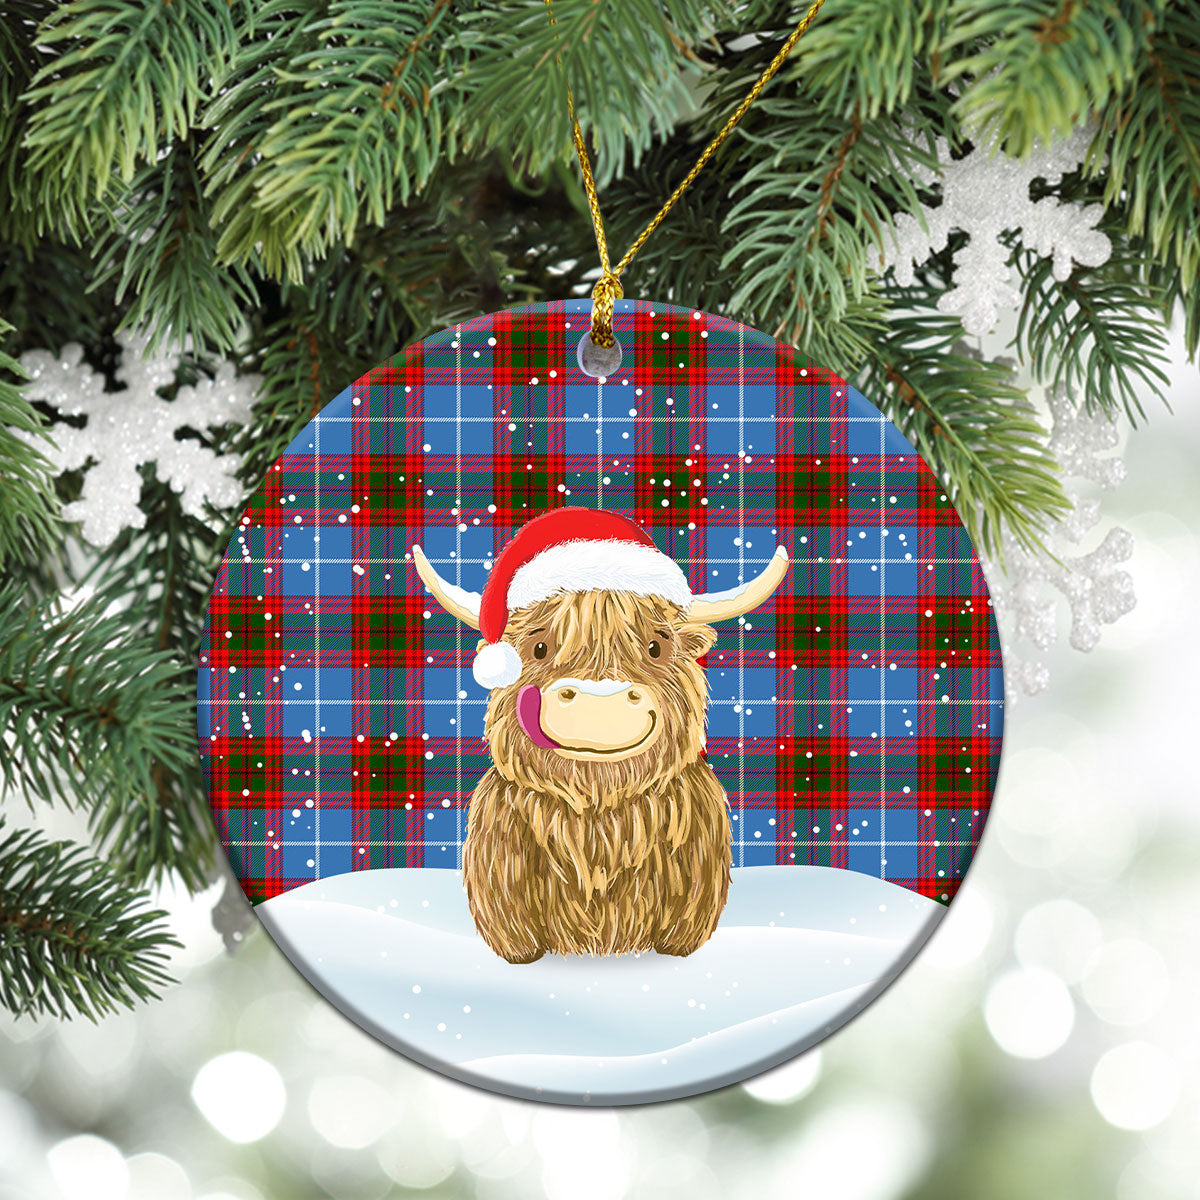 Pennycook Tartan Christmas Ceramic Ornament - Highland Cows Style